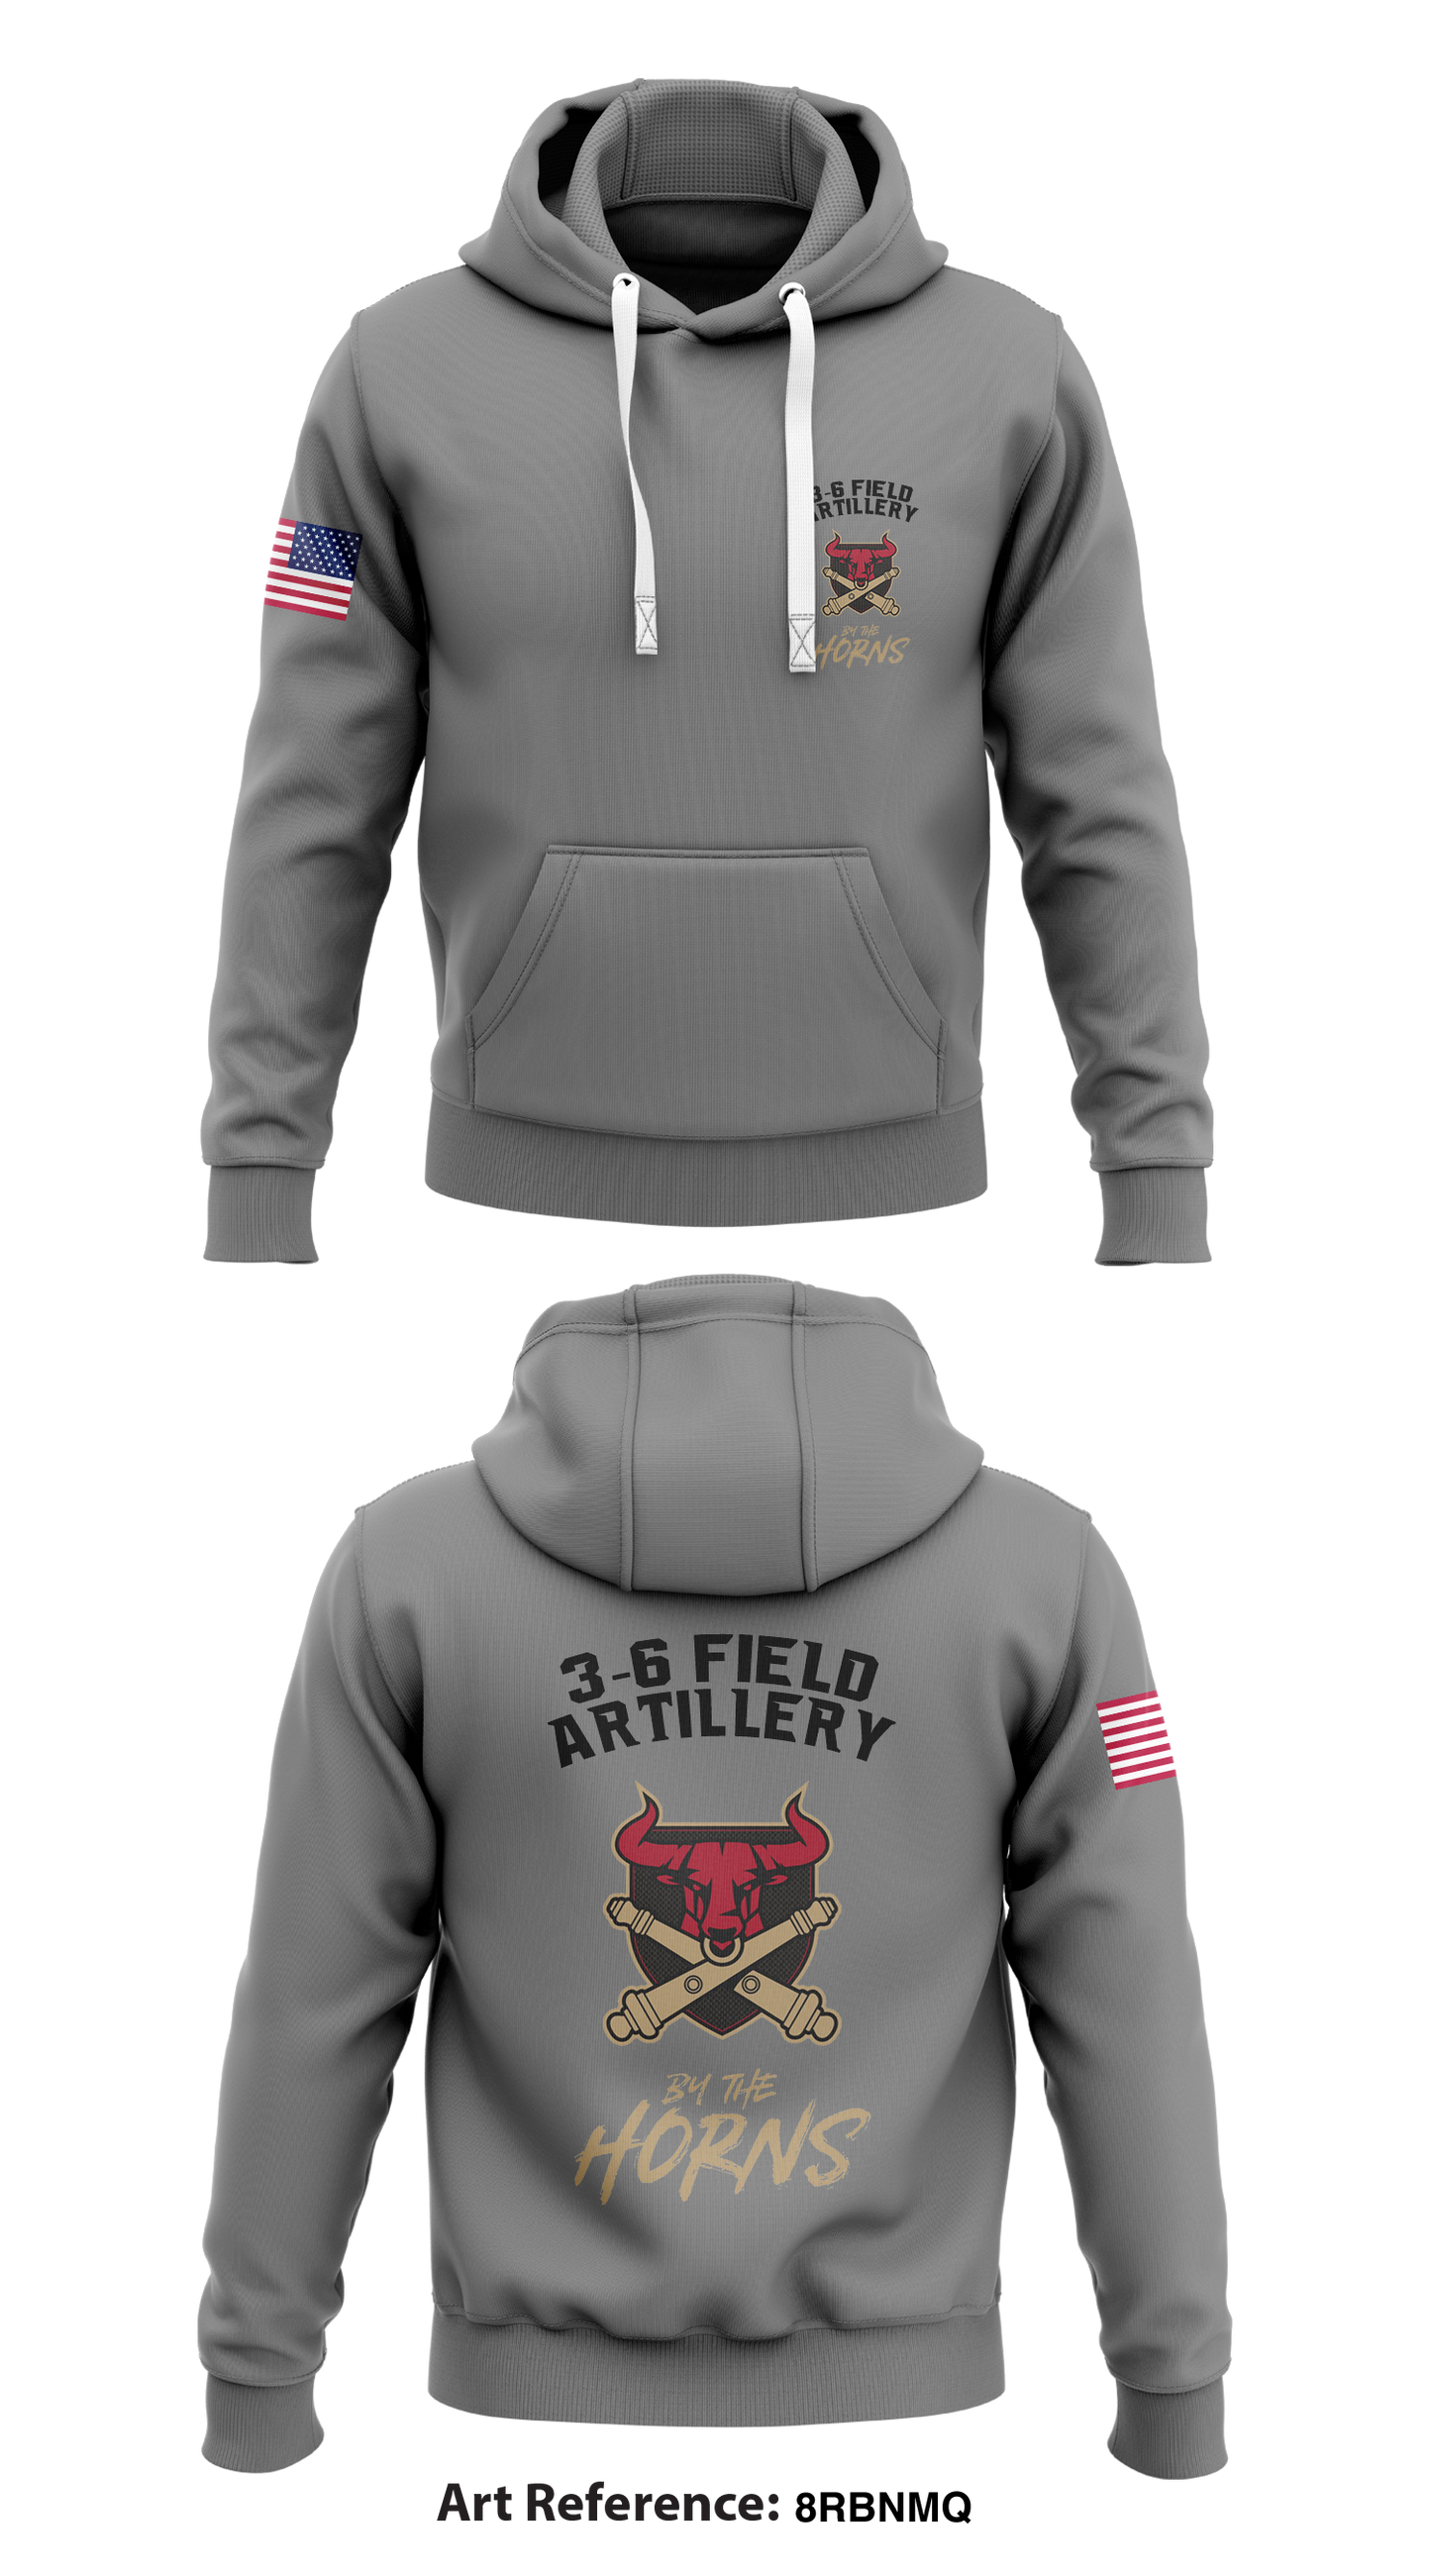 3-6 field artillery  Store 1  Core Men's Hooded Performance Sweatshirt - 8RbNmq